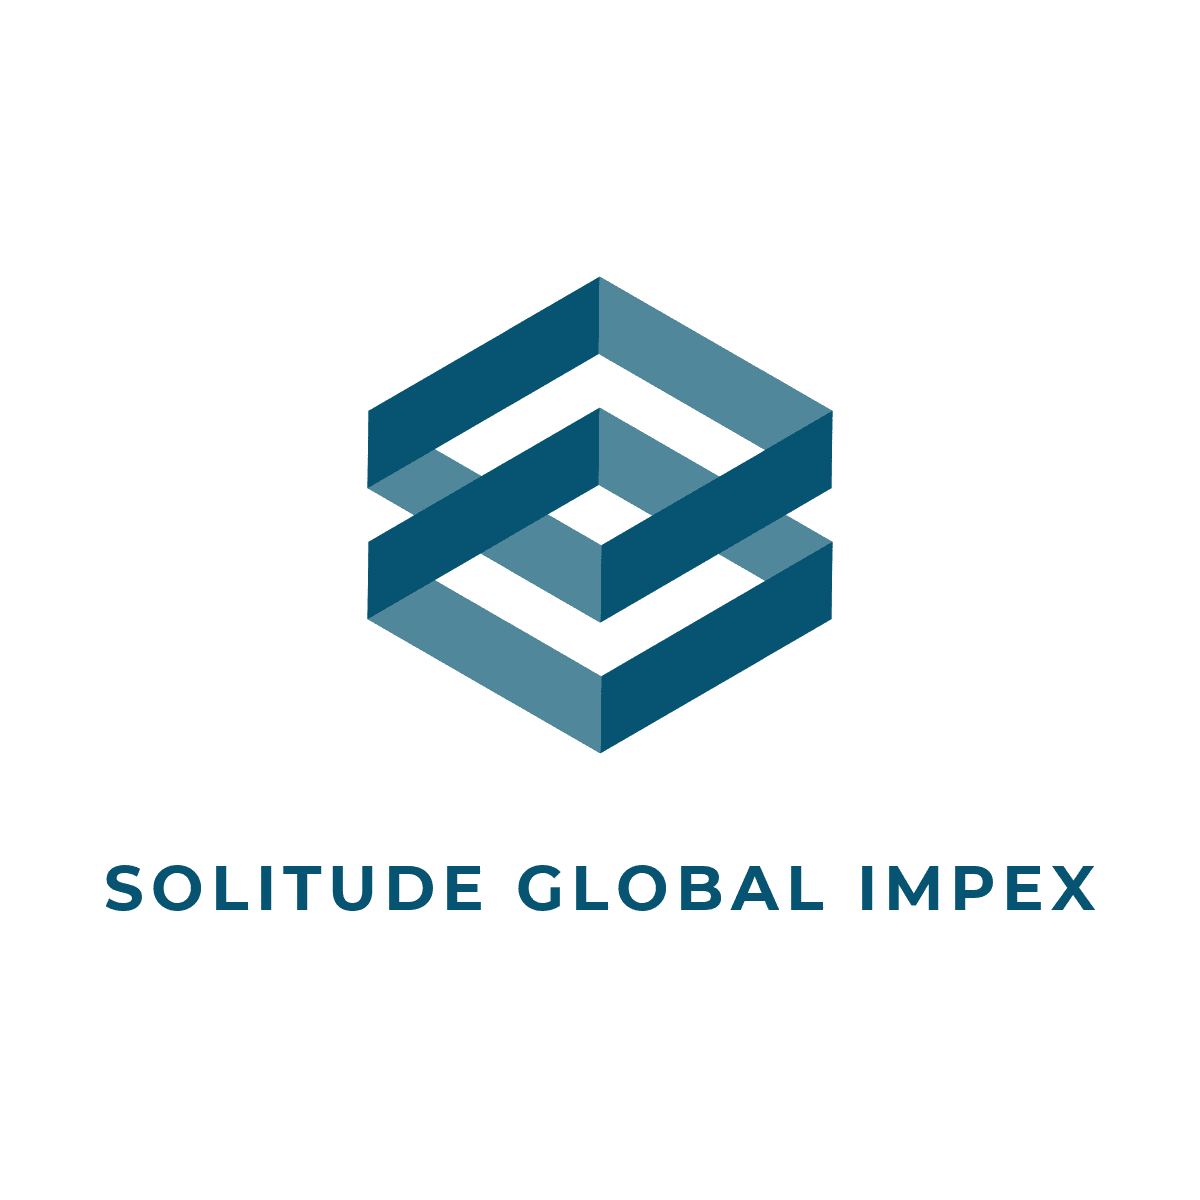 SOLITUDE GLOBAL IMPEX